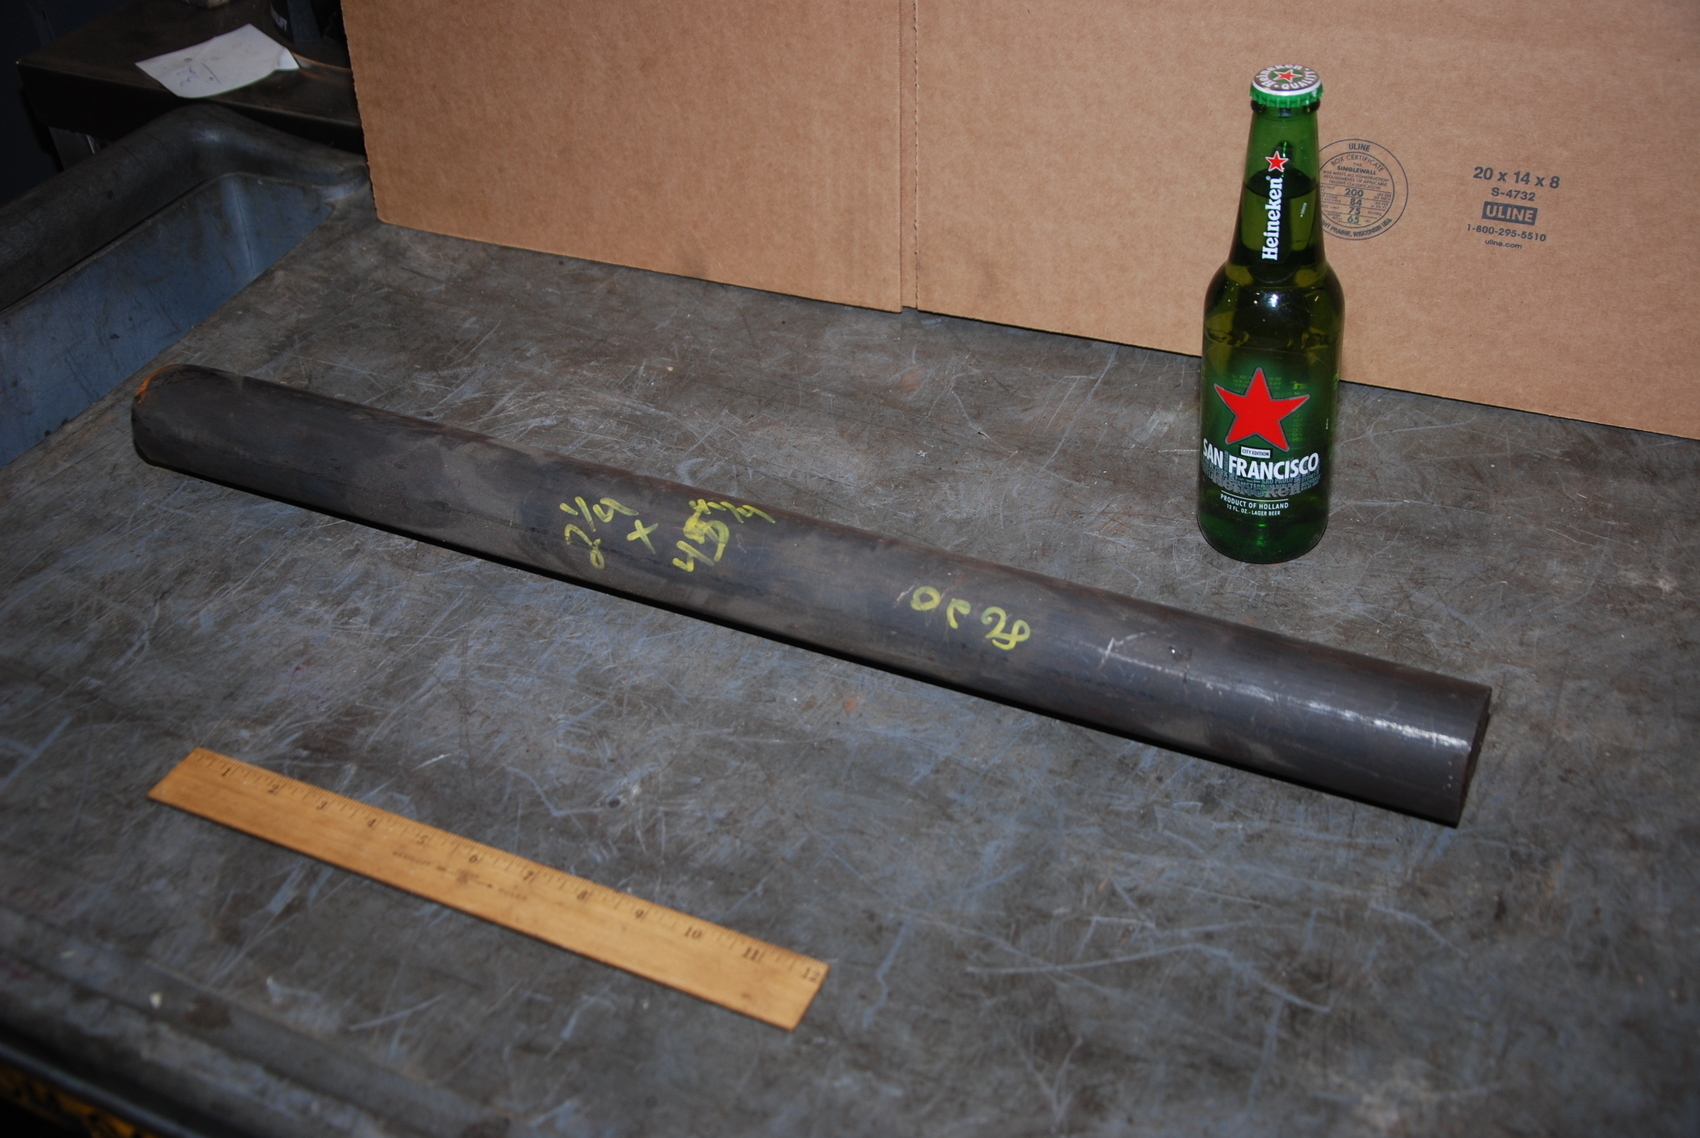 8620;Round Steel Bar For Press Blacksmith Anvil;26 lbs.D 2-1/8xH 26